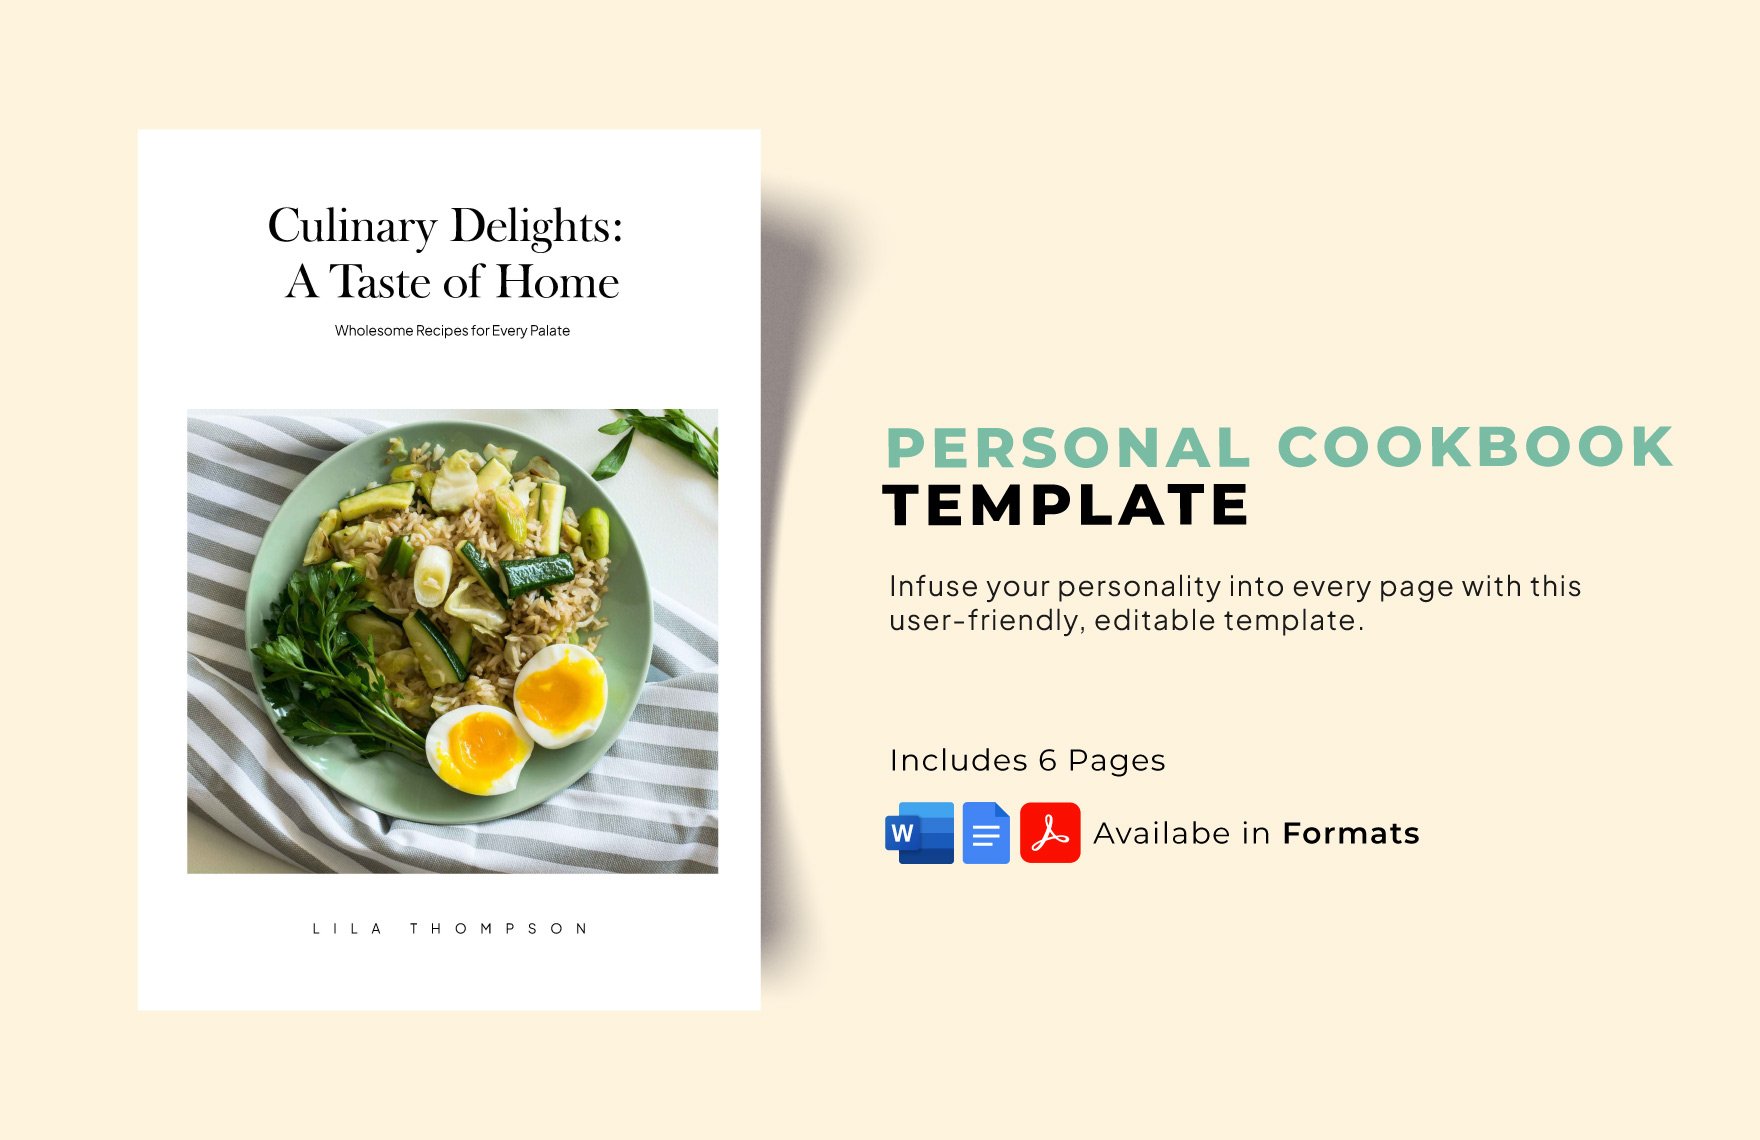 Personal Cookbook Template